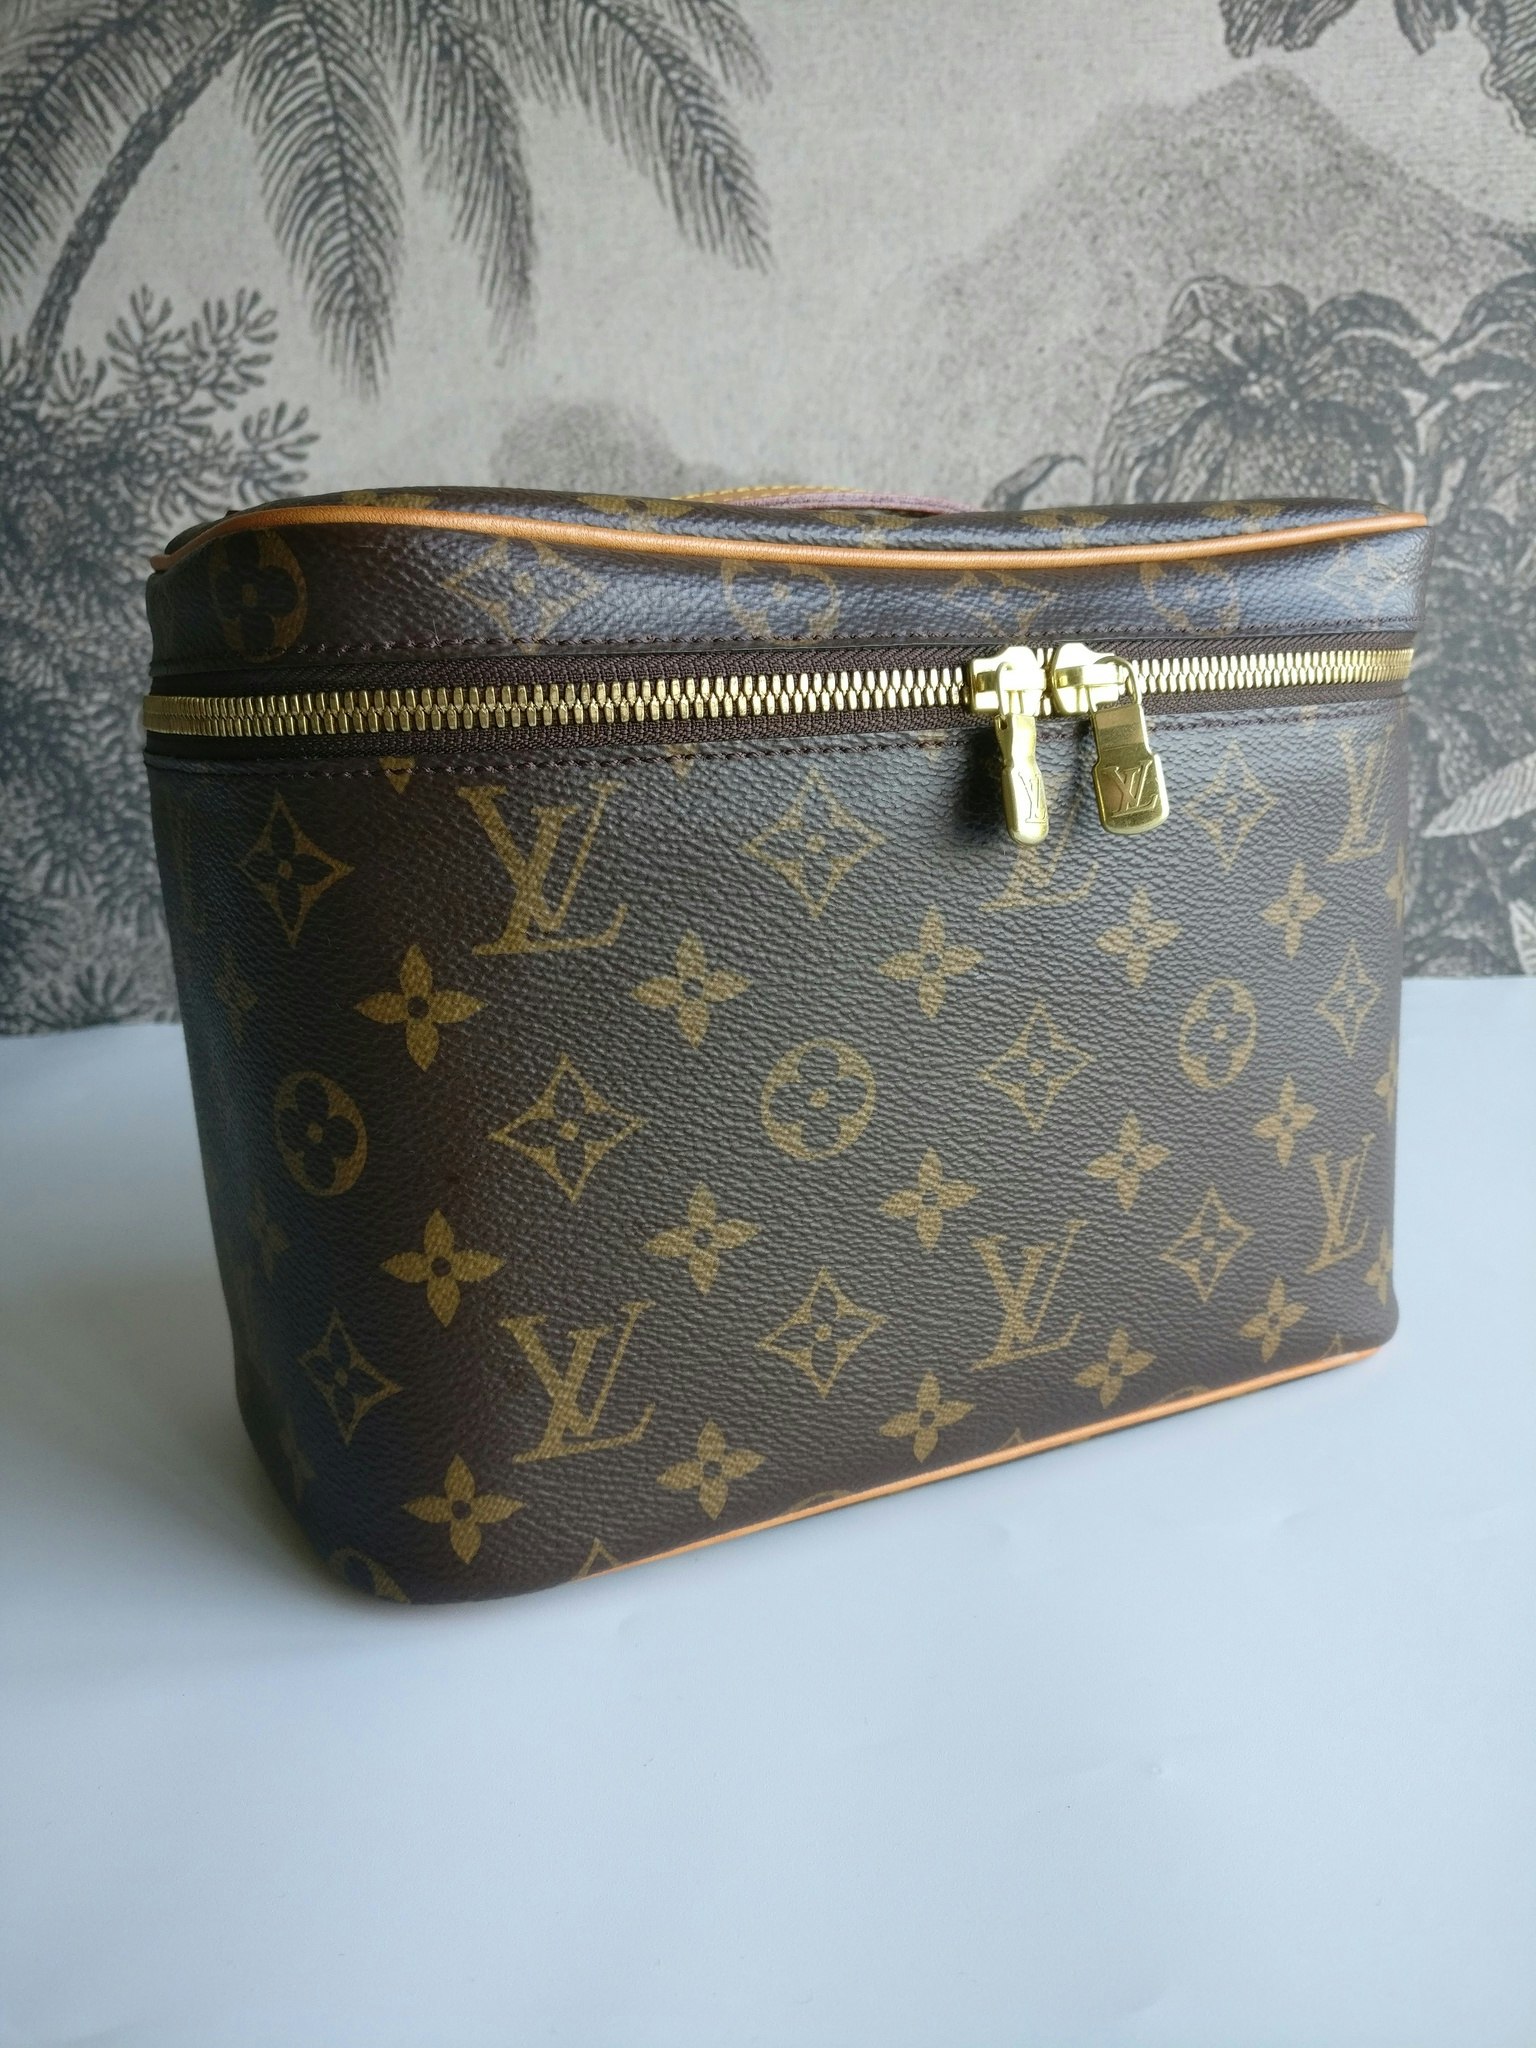 LV Nice Bb Monogram bag 🤎 @Louis Vuitton #louisvuitton #louisvuitton